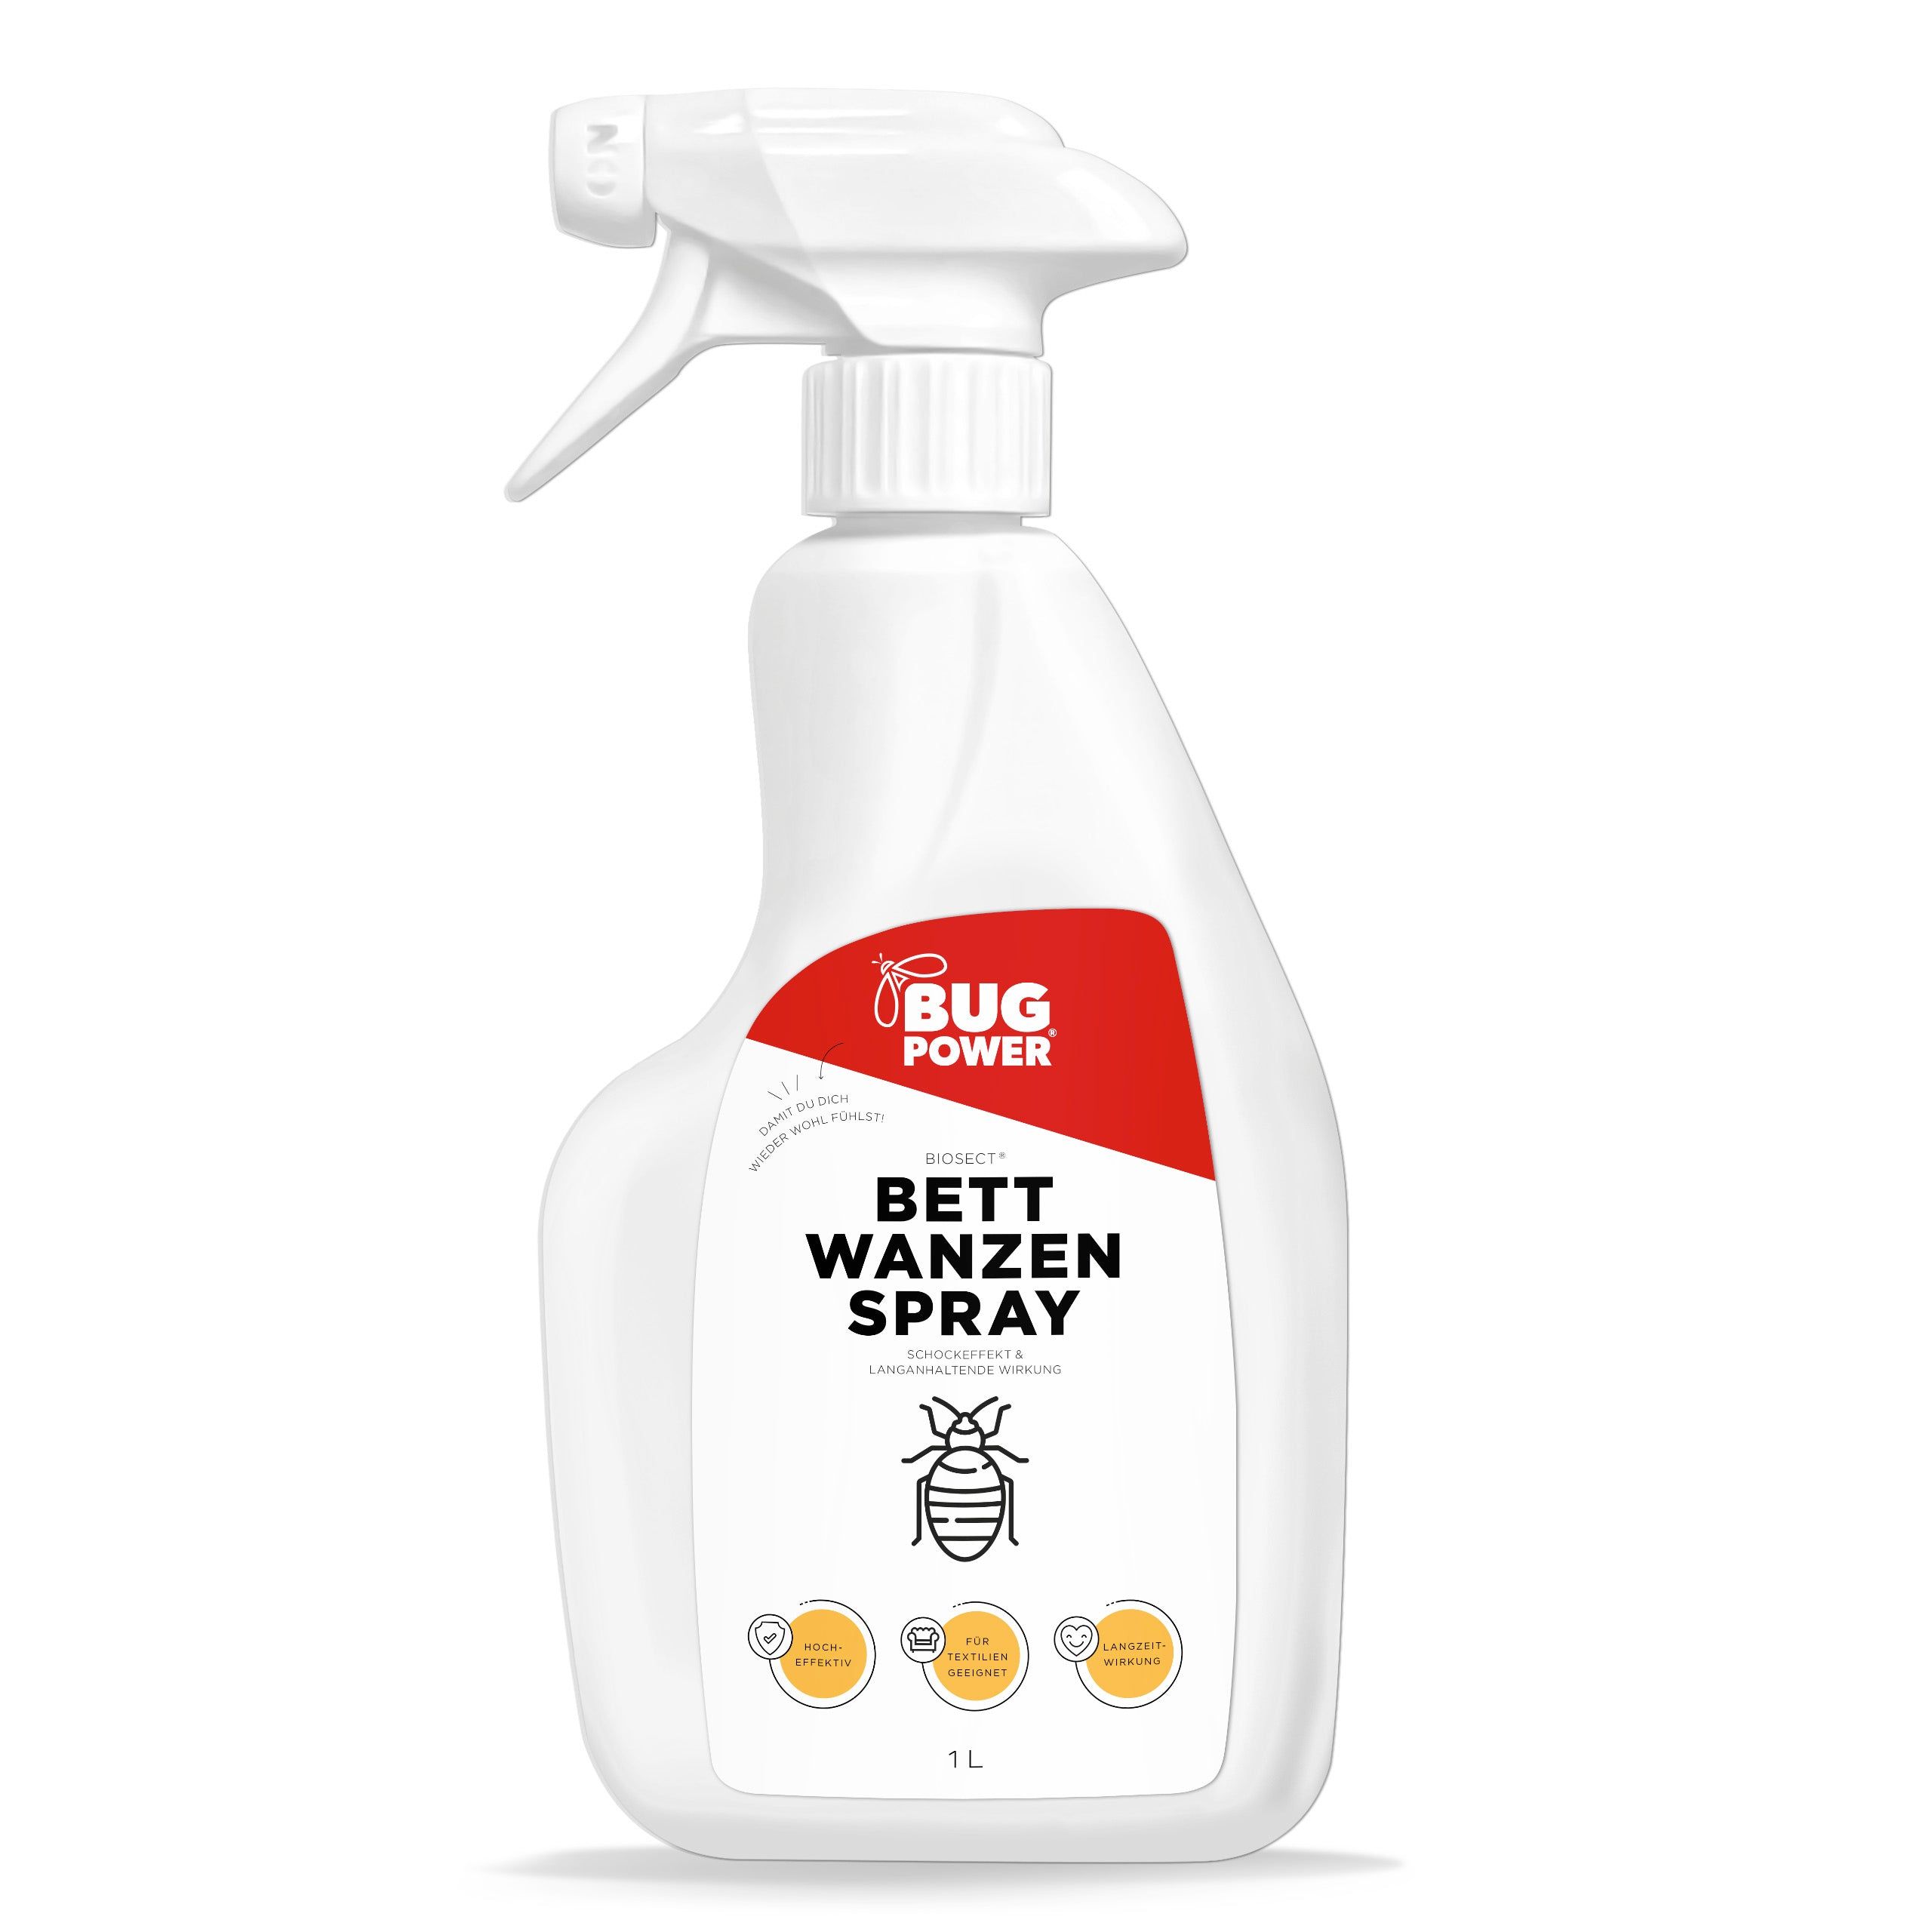 BugPower Bettwanzen Spray